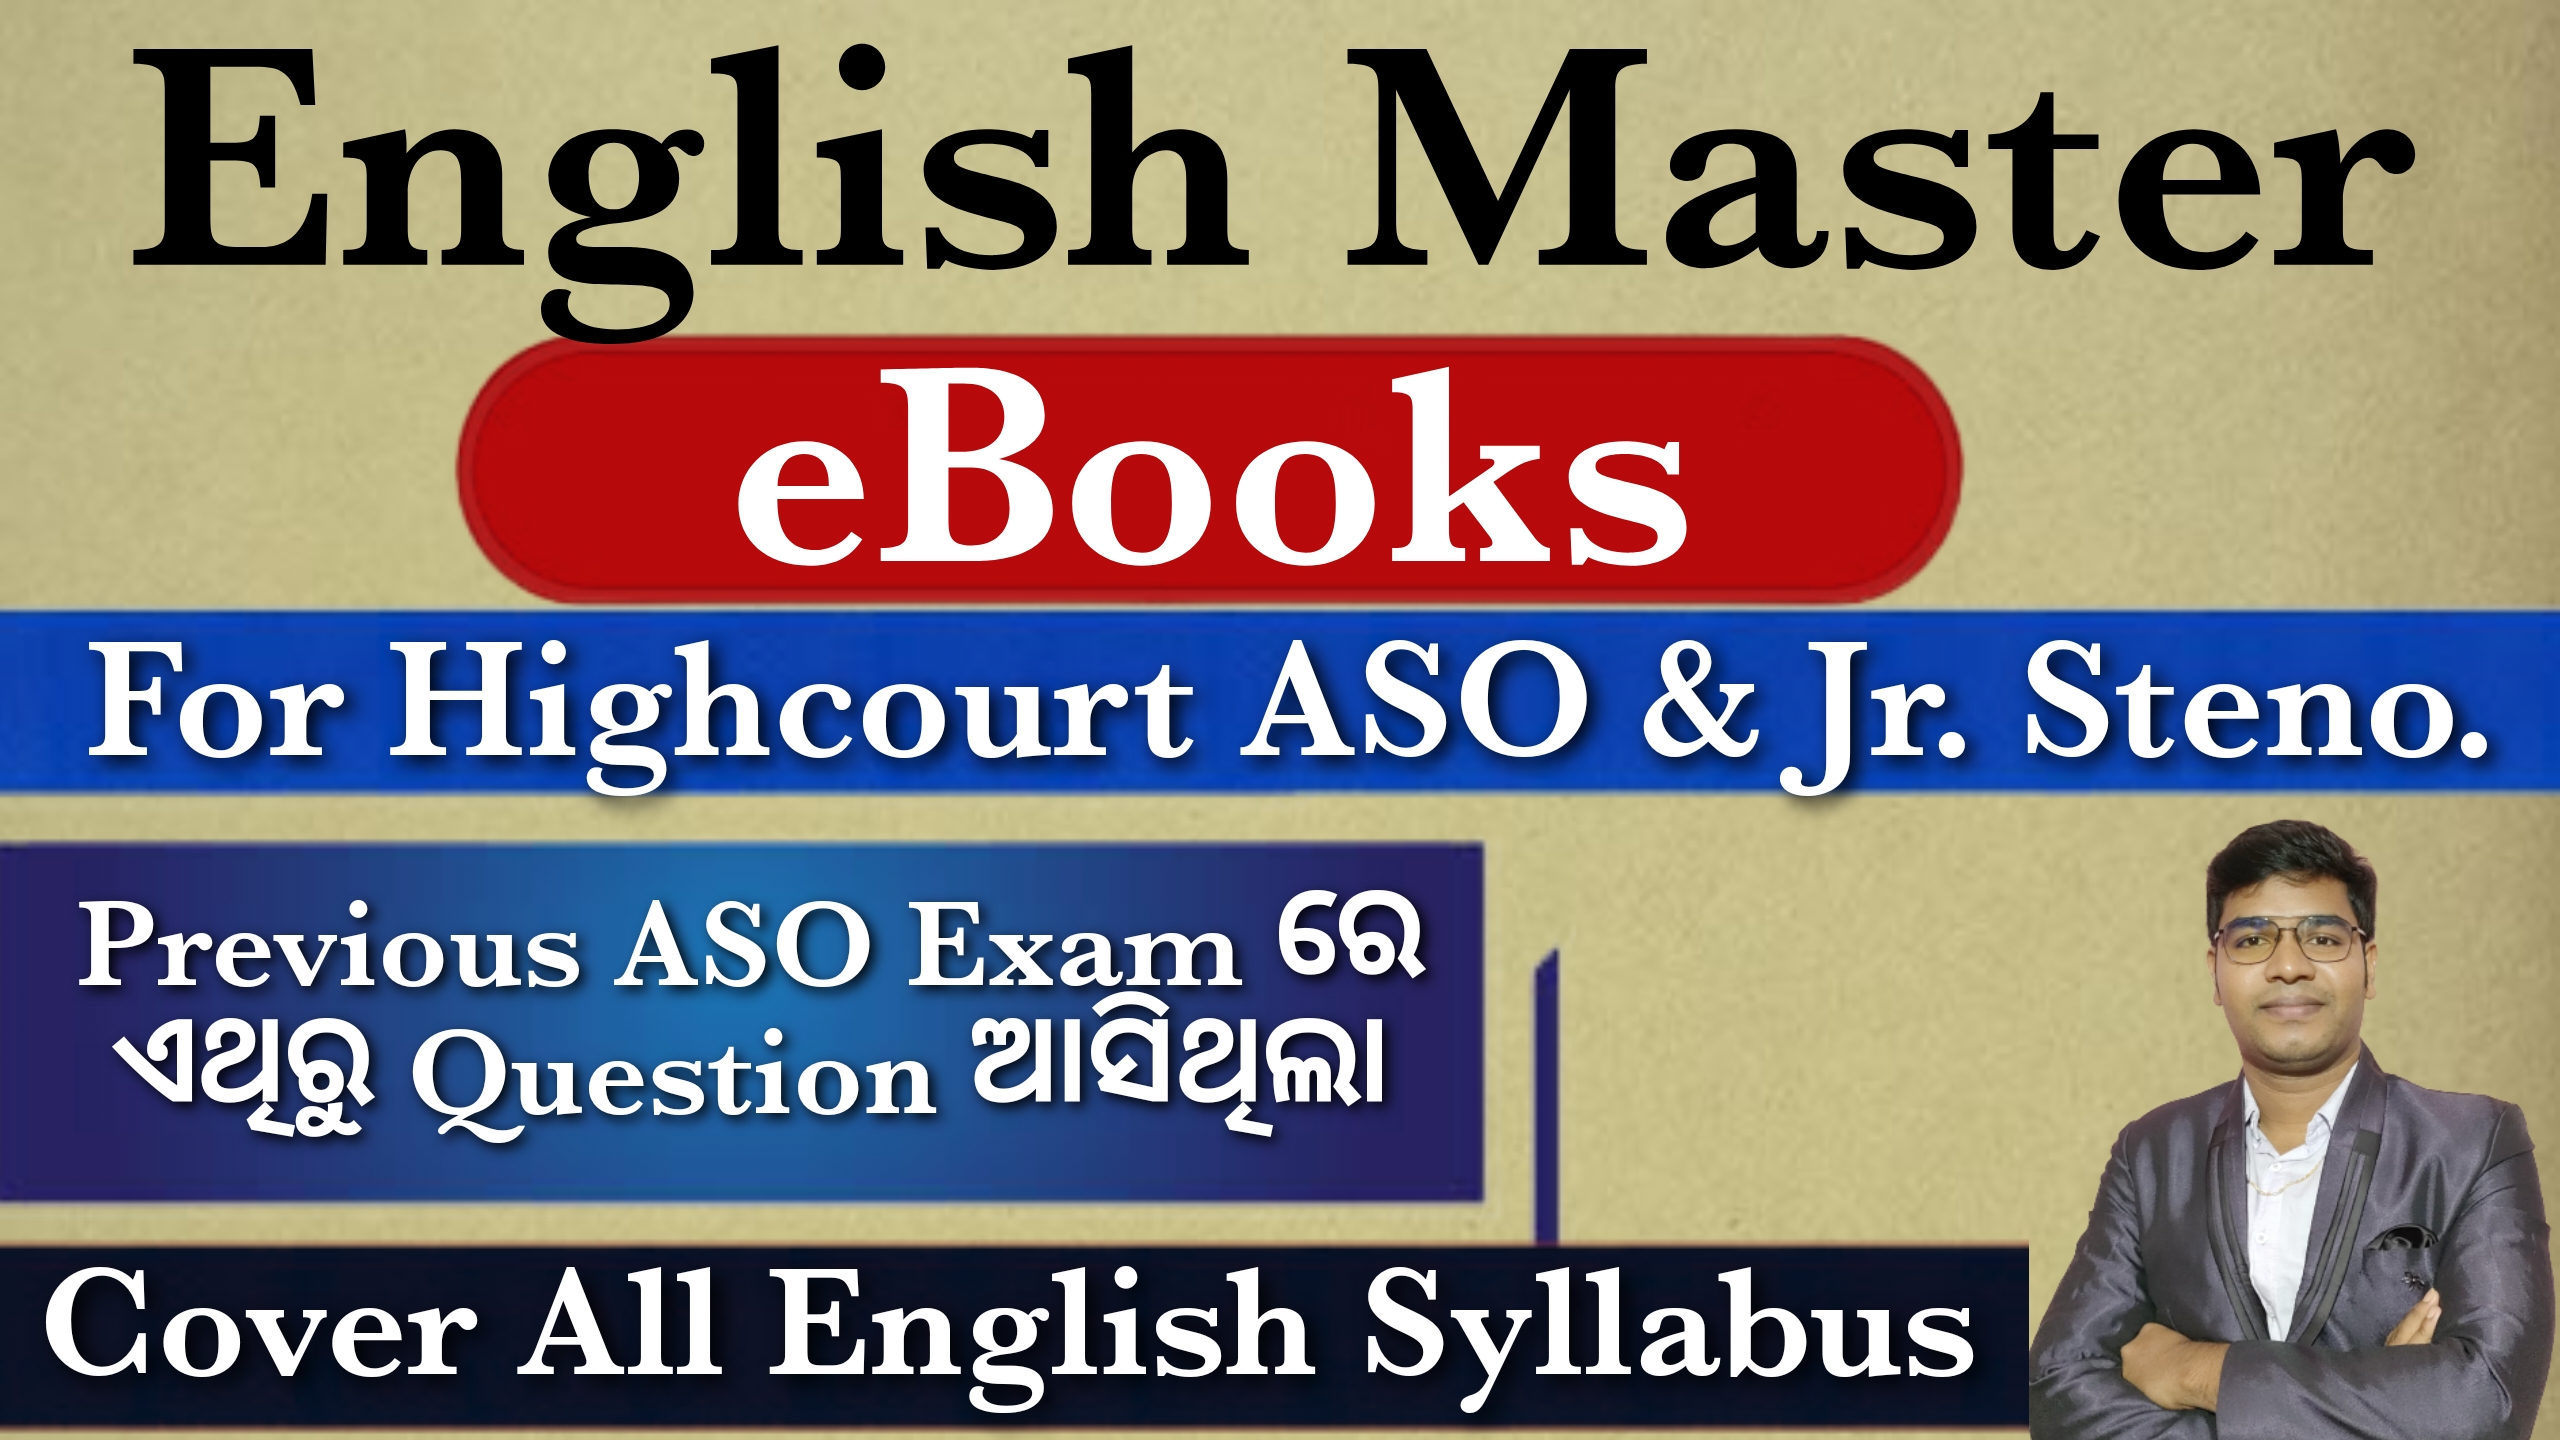 English Master Courses E-Books High Court ASO & Steno Exam